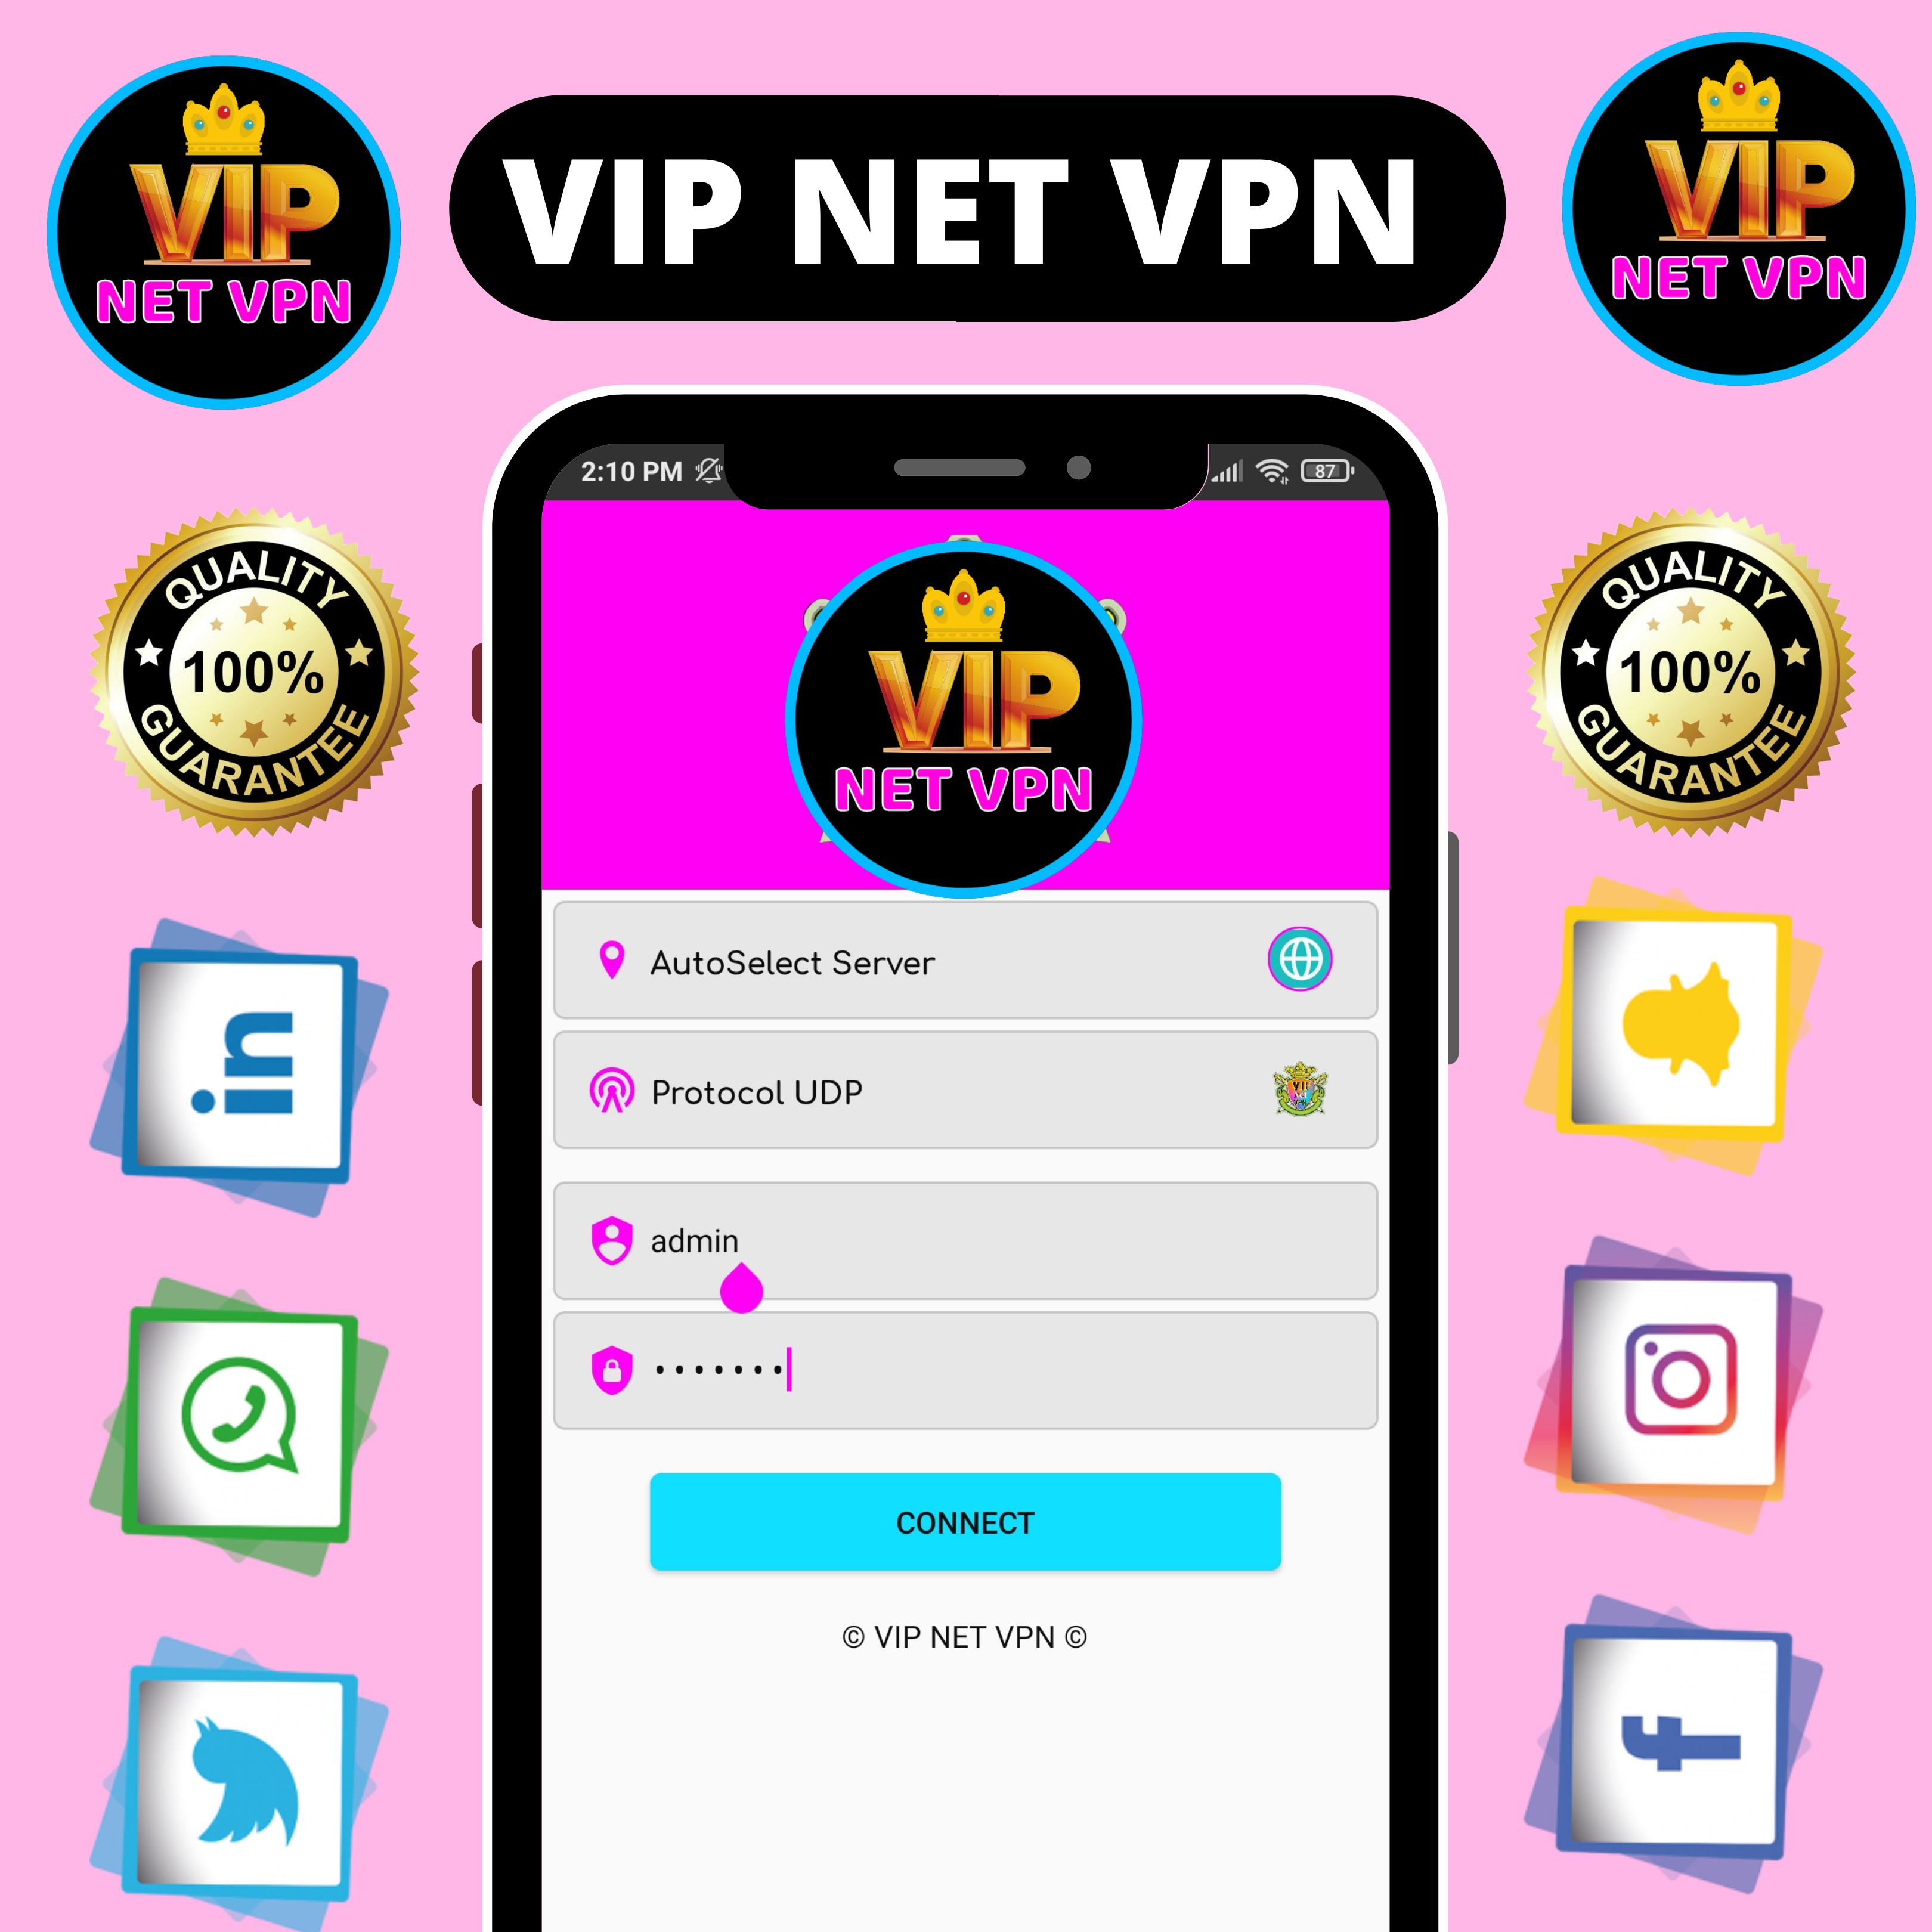 Https vpn net. Код для активации вип VIP VPN. Super VPN.